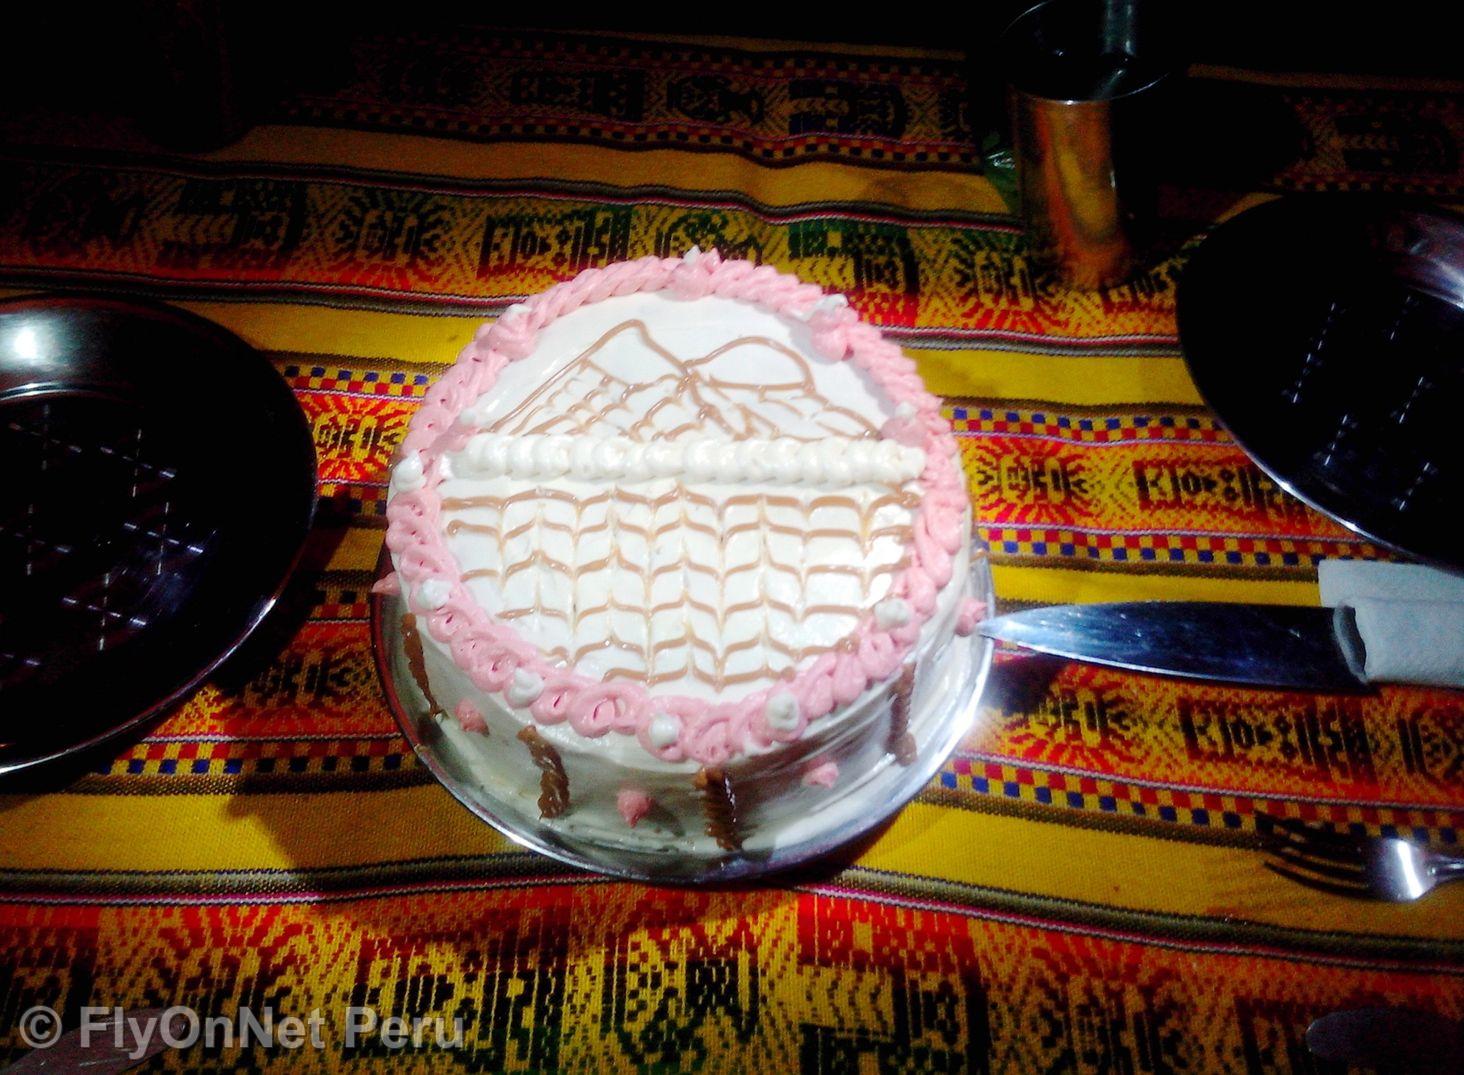 Álbum de fotos: Birthday cake during the trek, Inca Trail